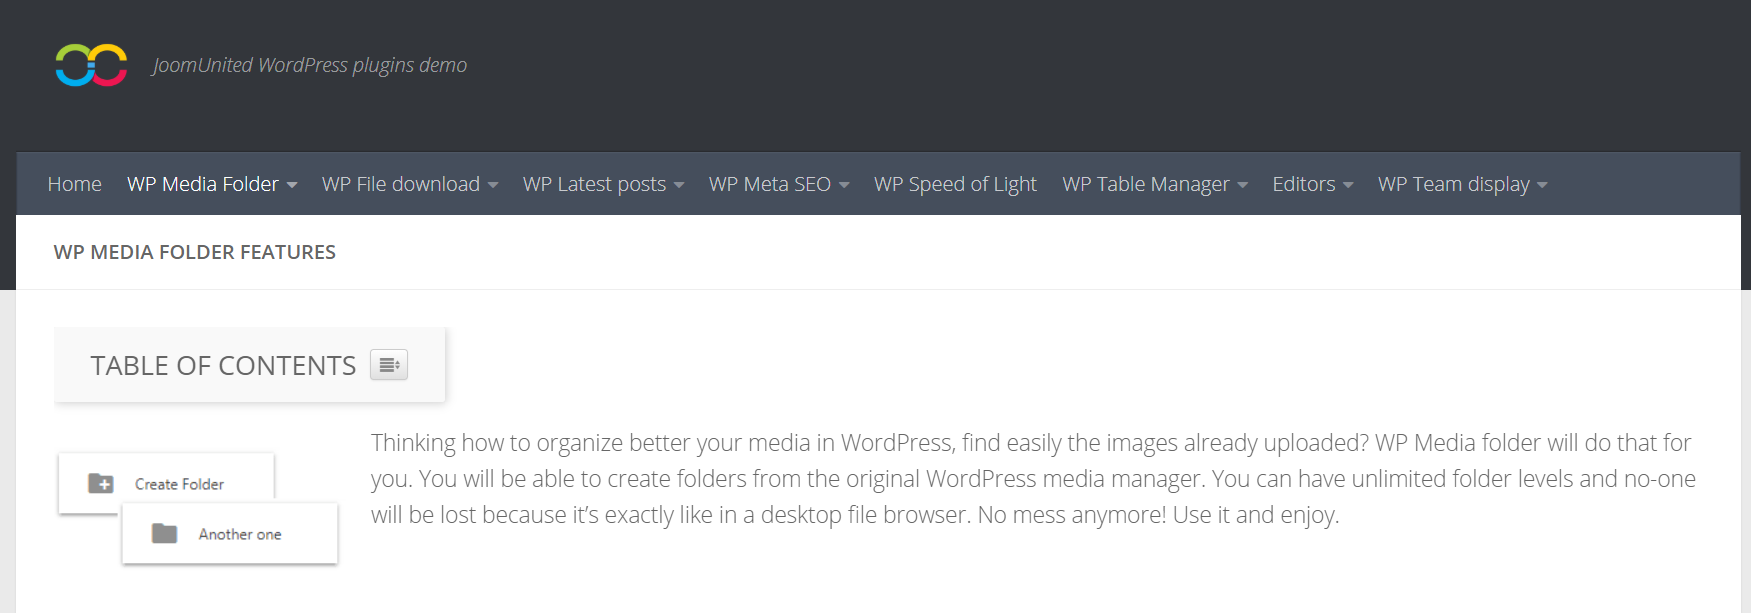 WP Media Folder Review– JoomUnited WordPress demo